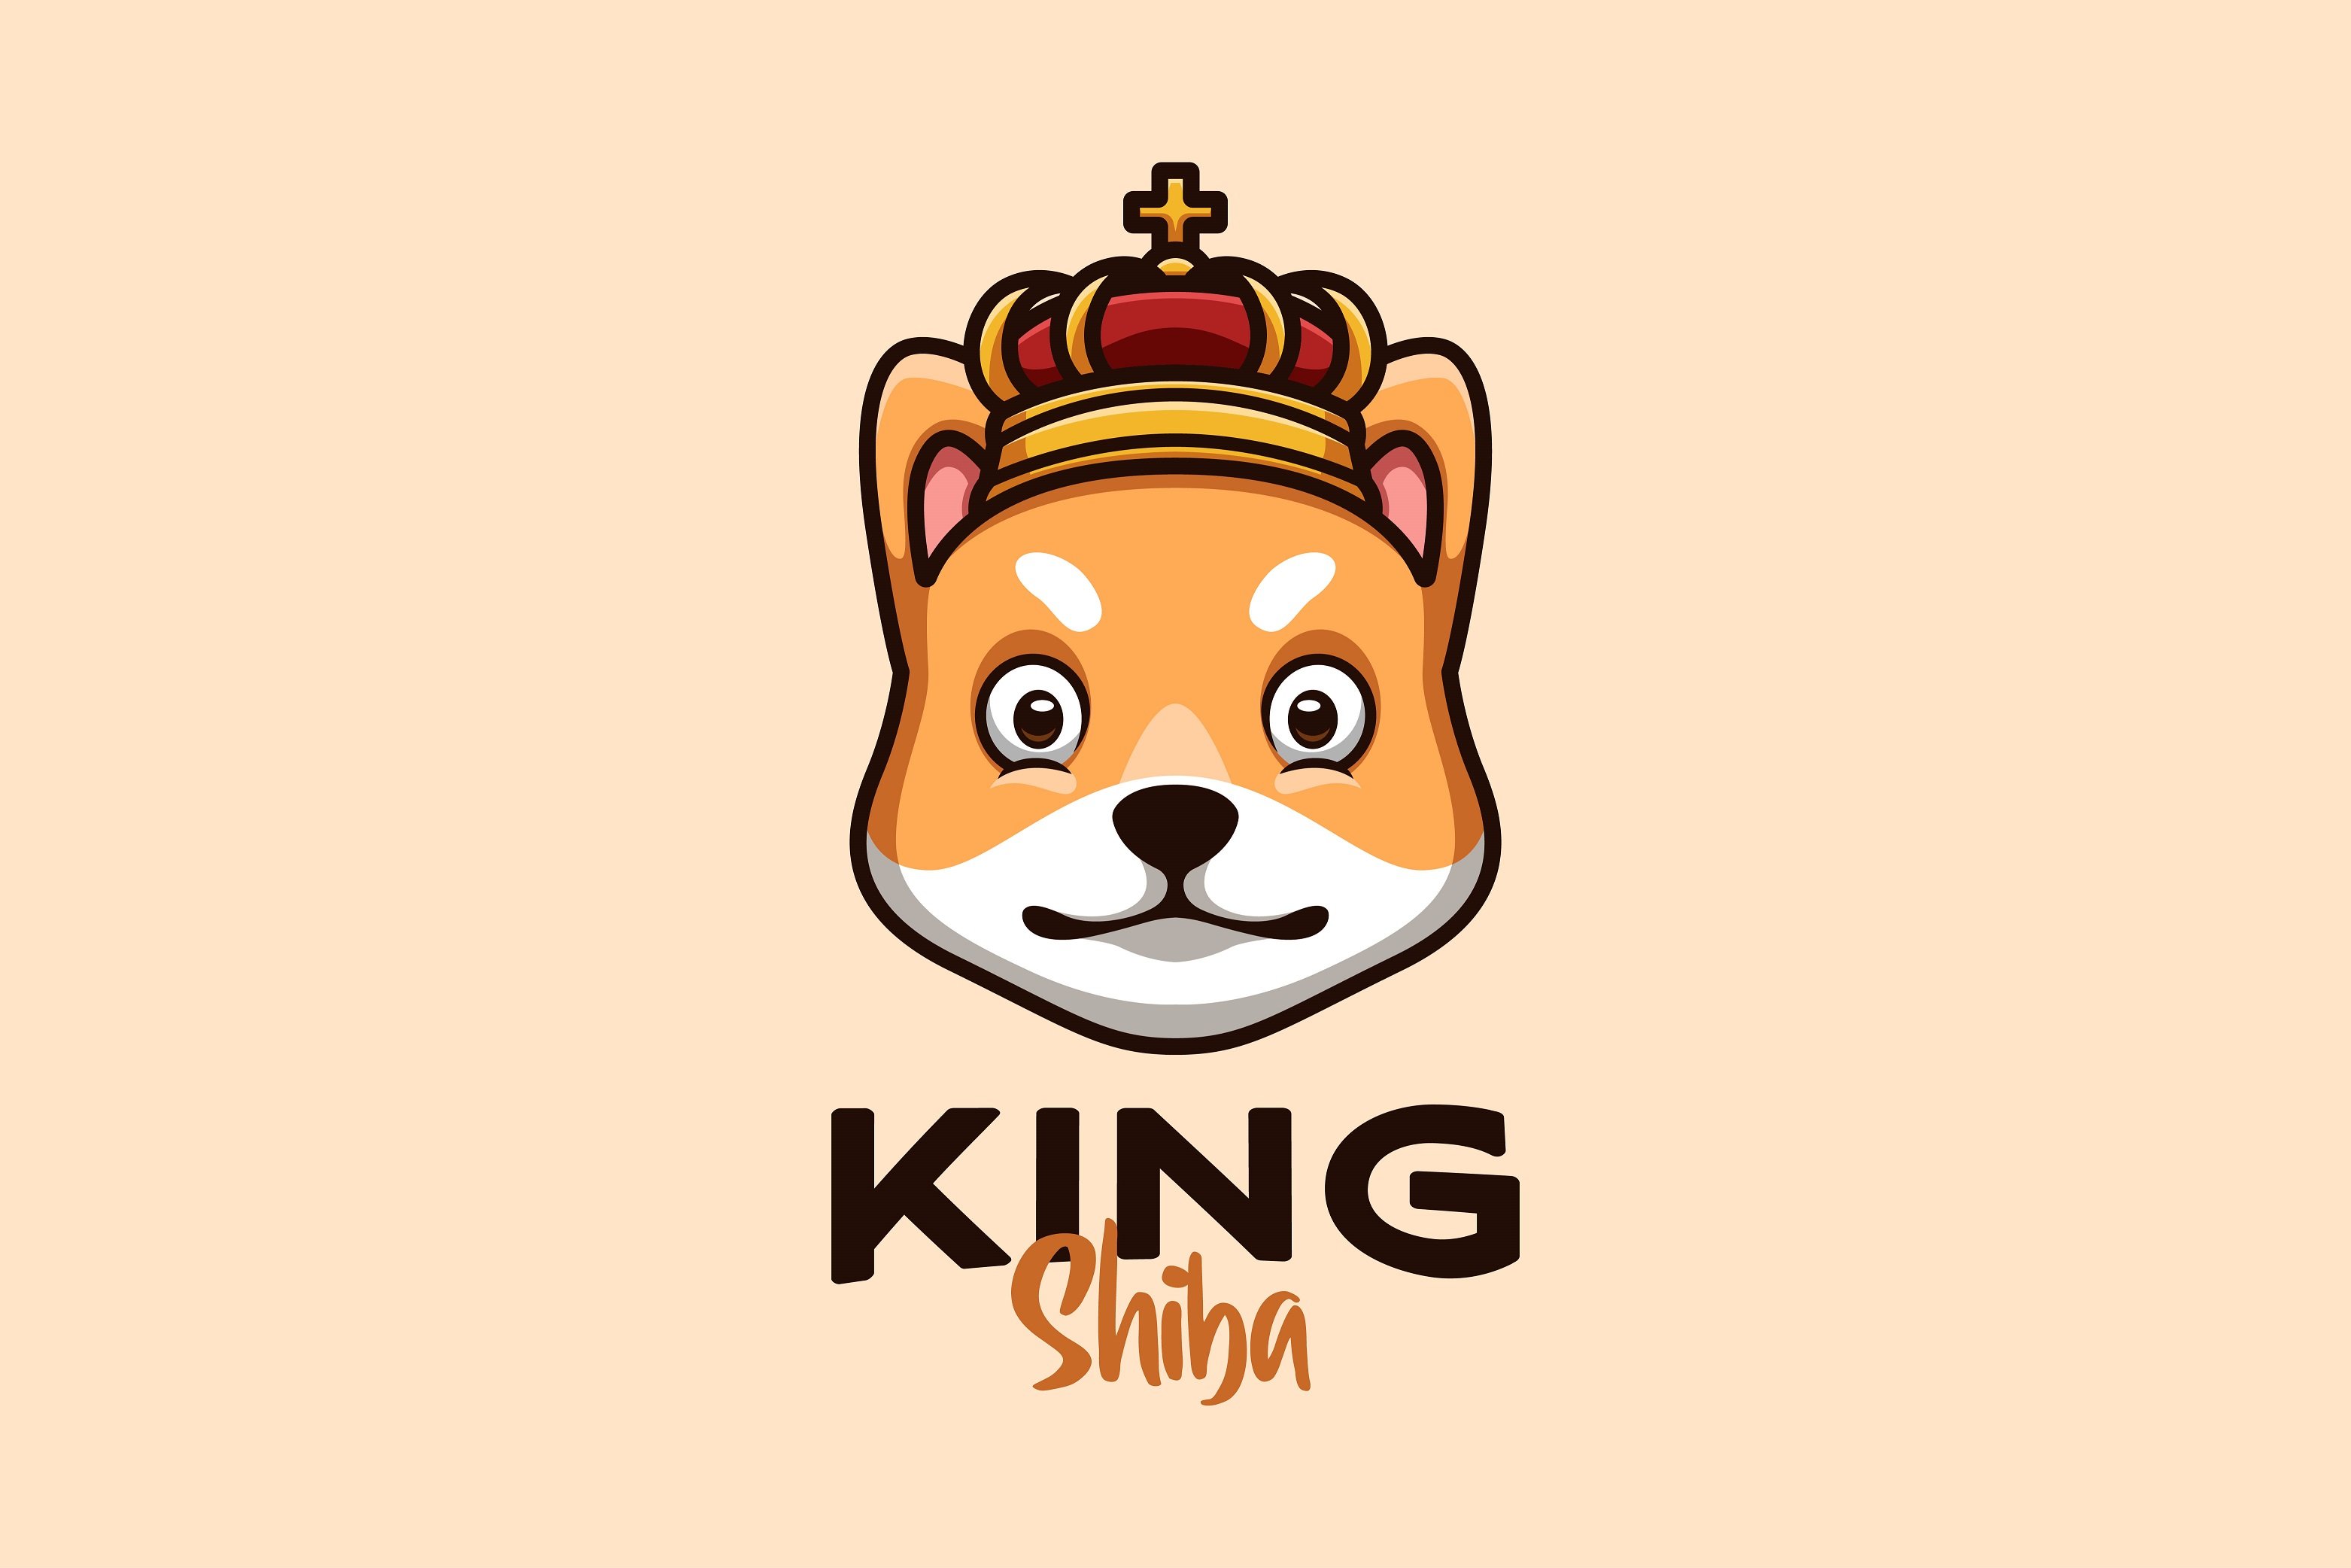 King Shiba Cartoon Logo cover image.